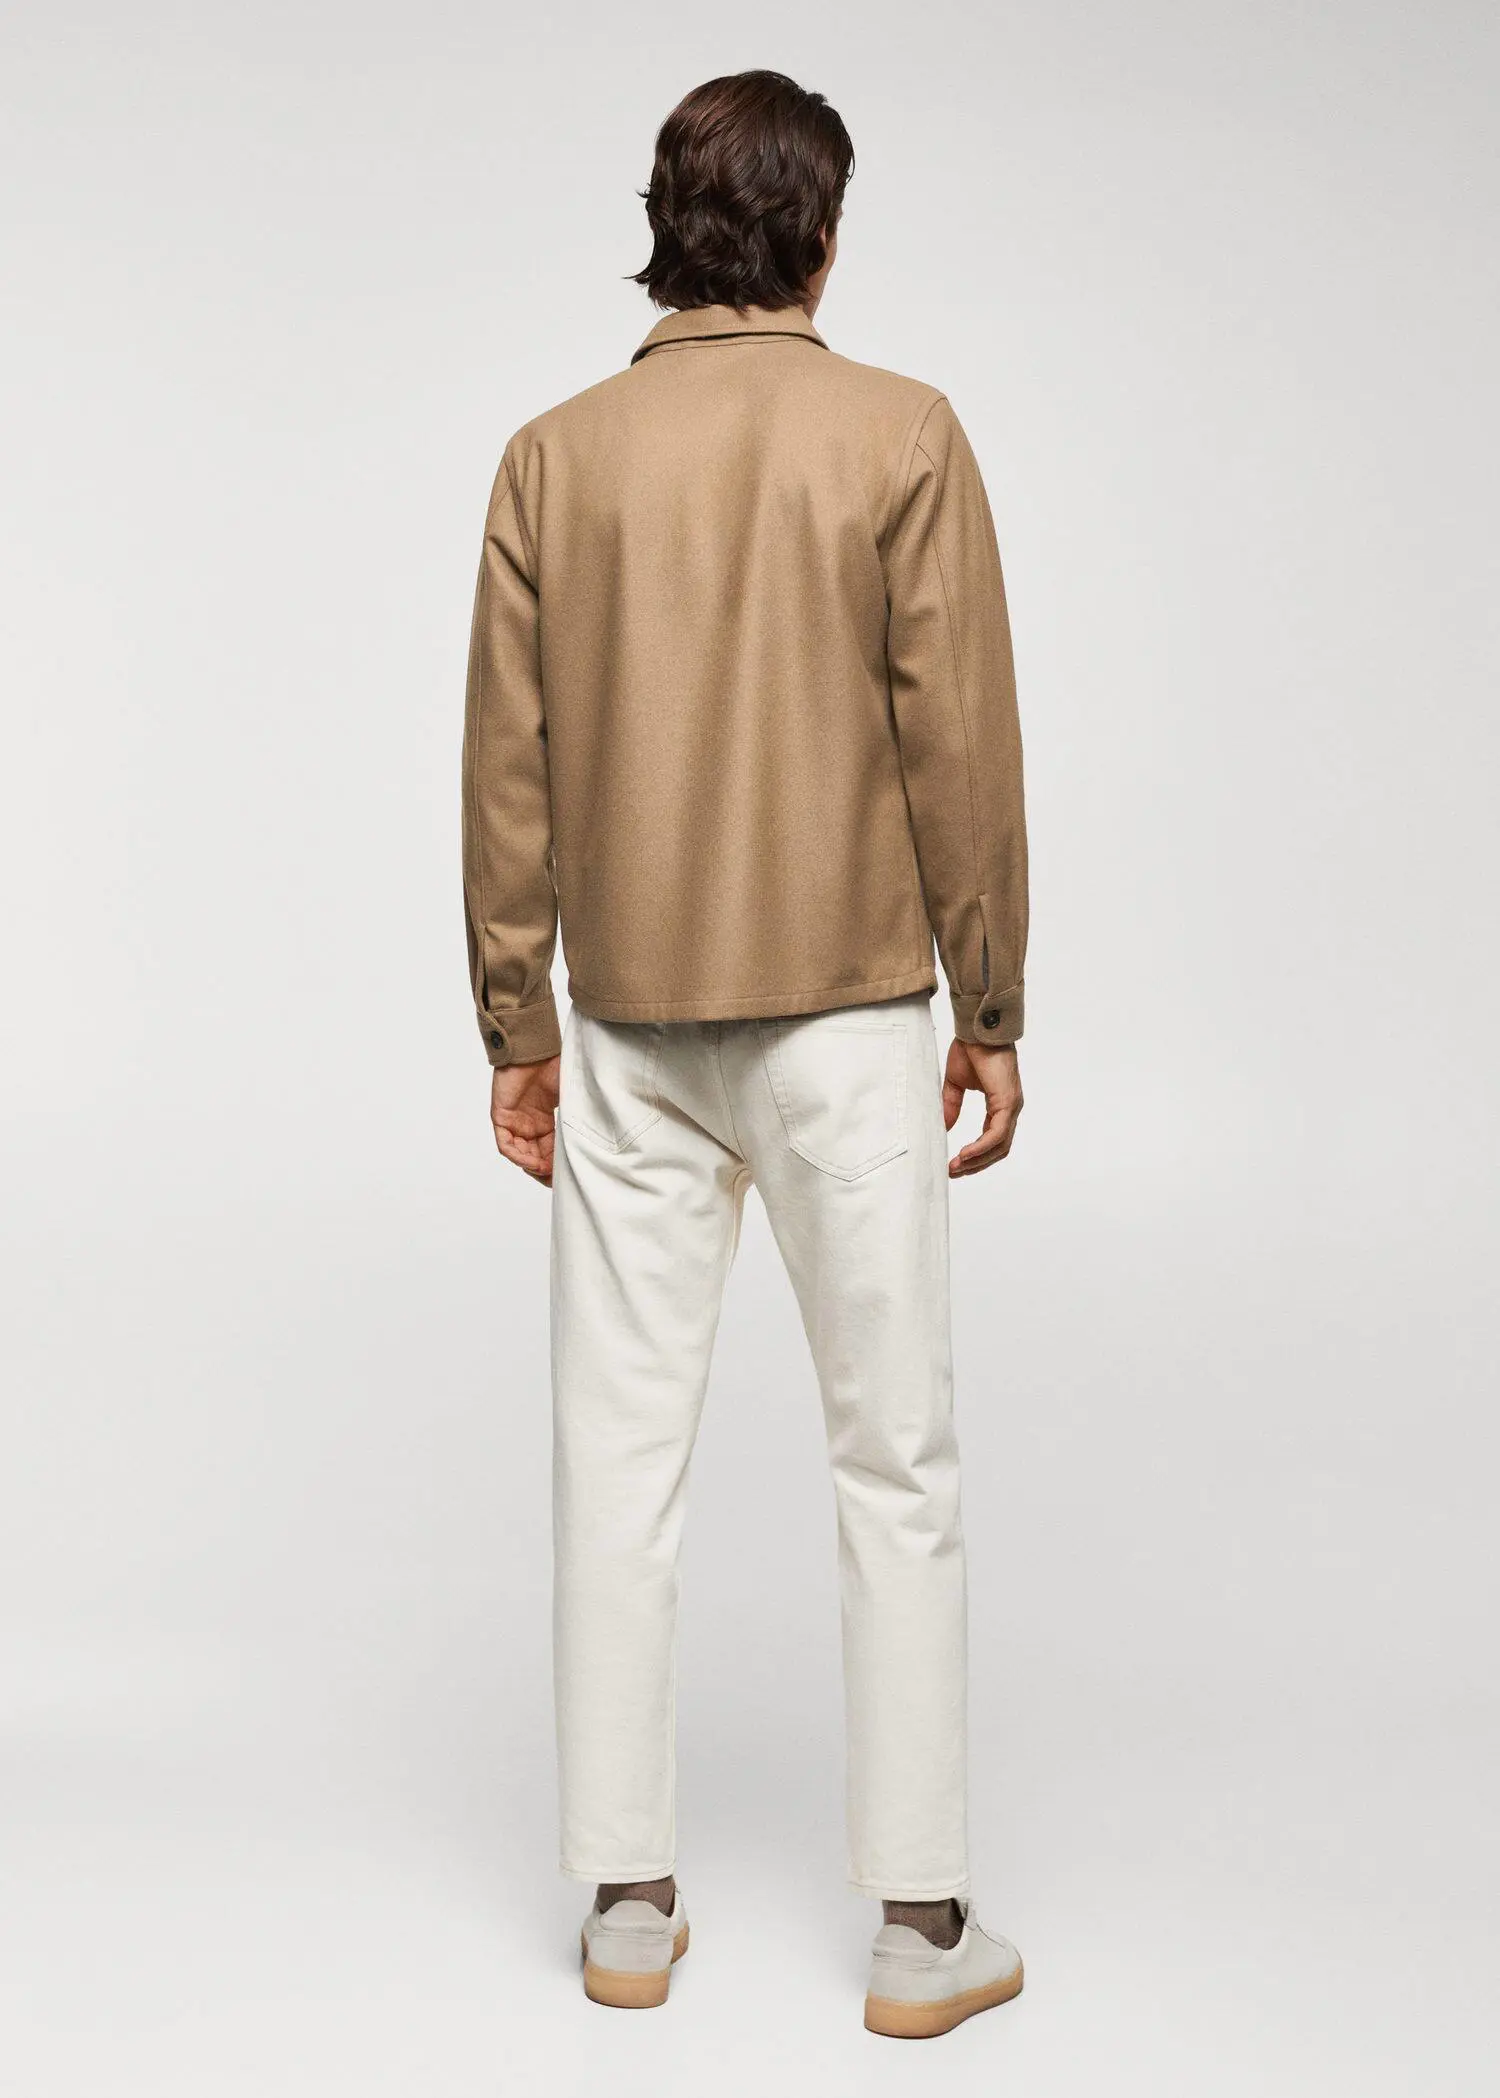 Mango Wool overshirt with pockets. 3